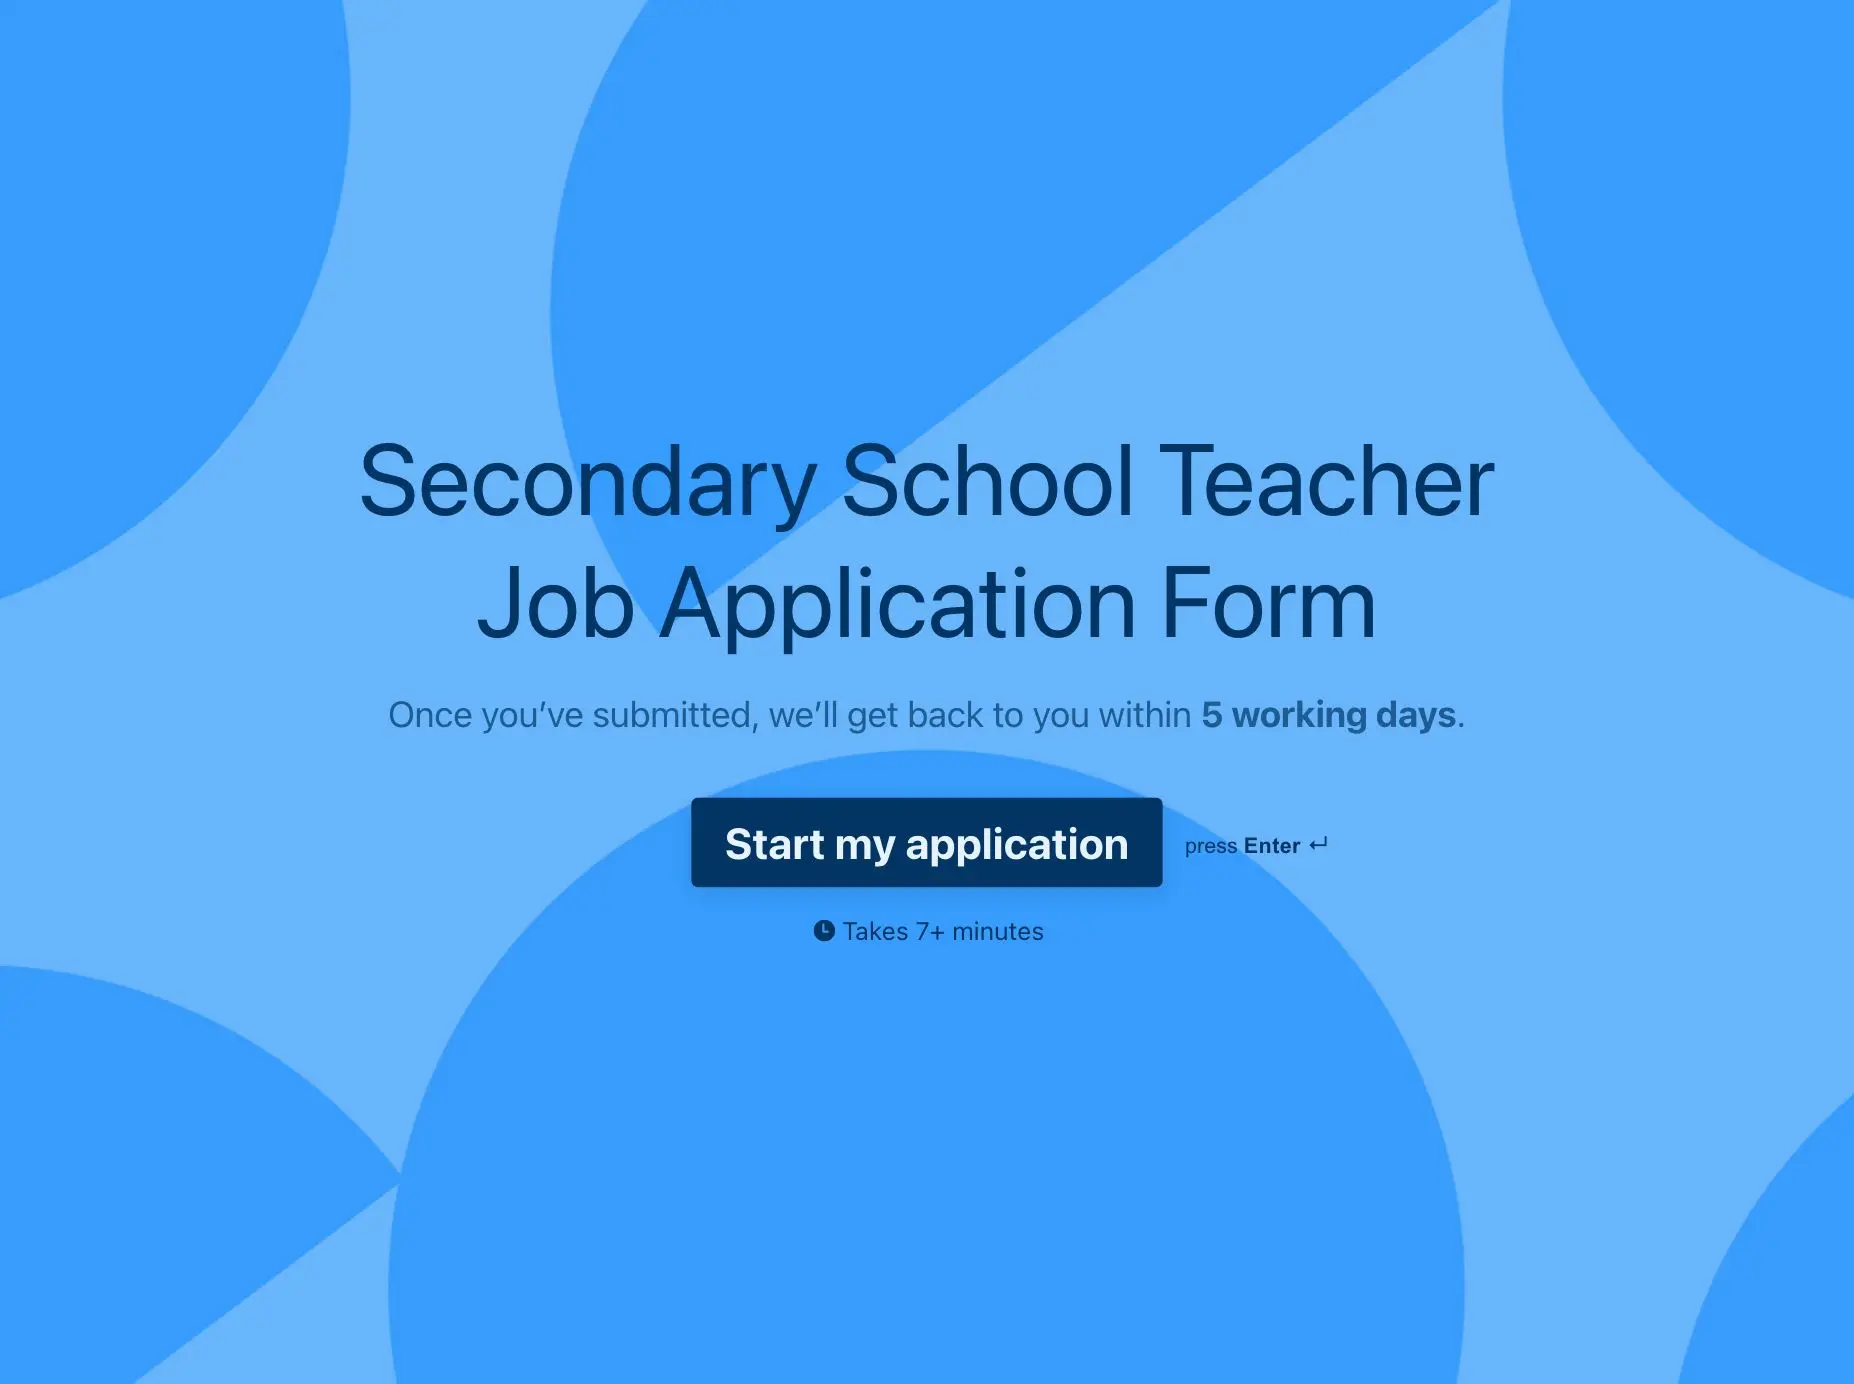 Secondary School Teacher Job Application Form Template Hero